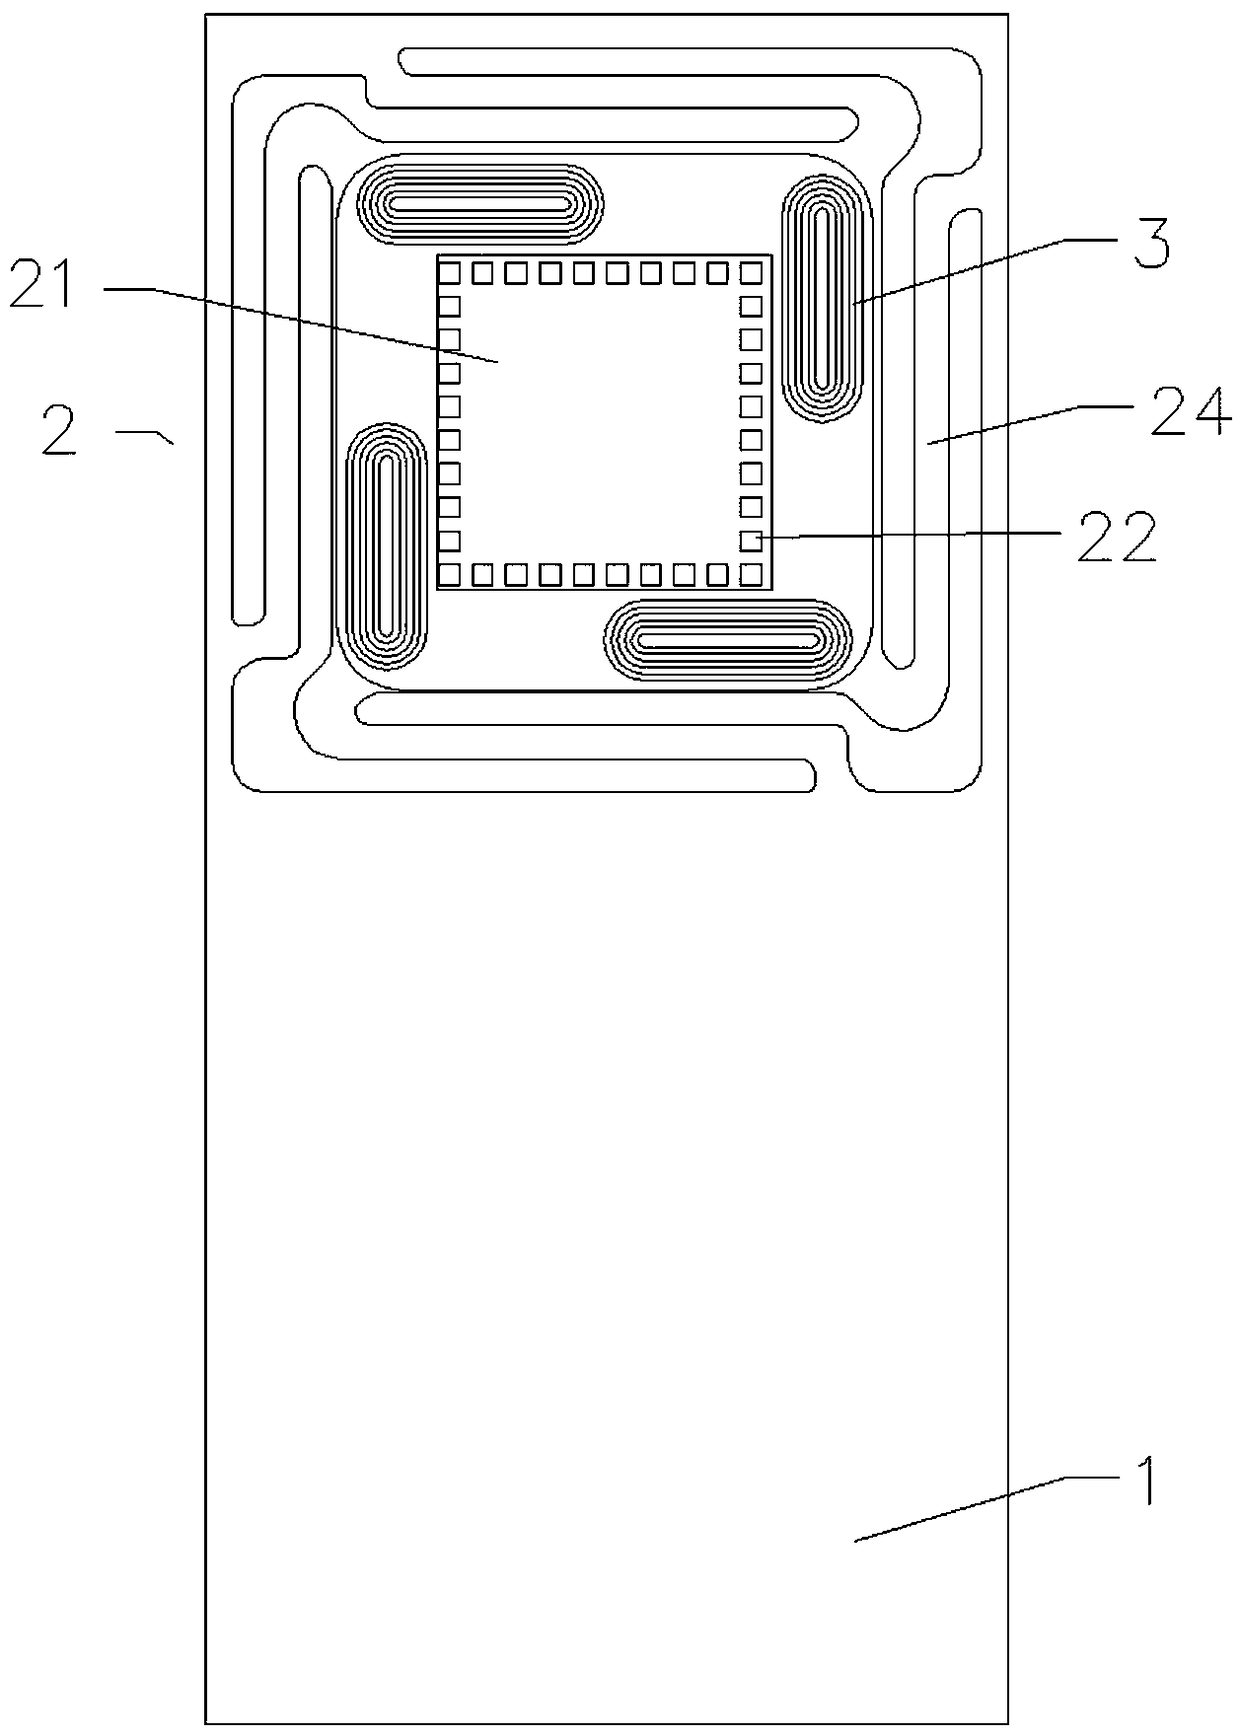 A flexible circuit board for soldering image sensors